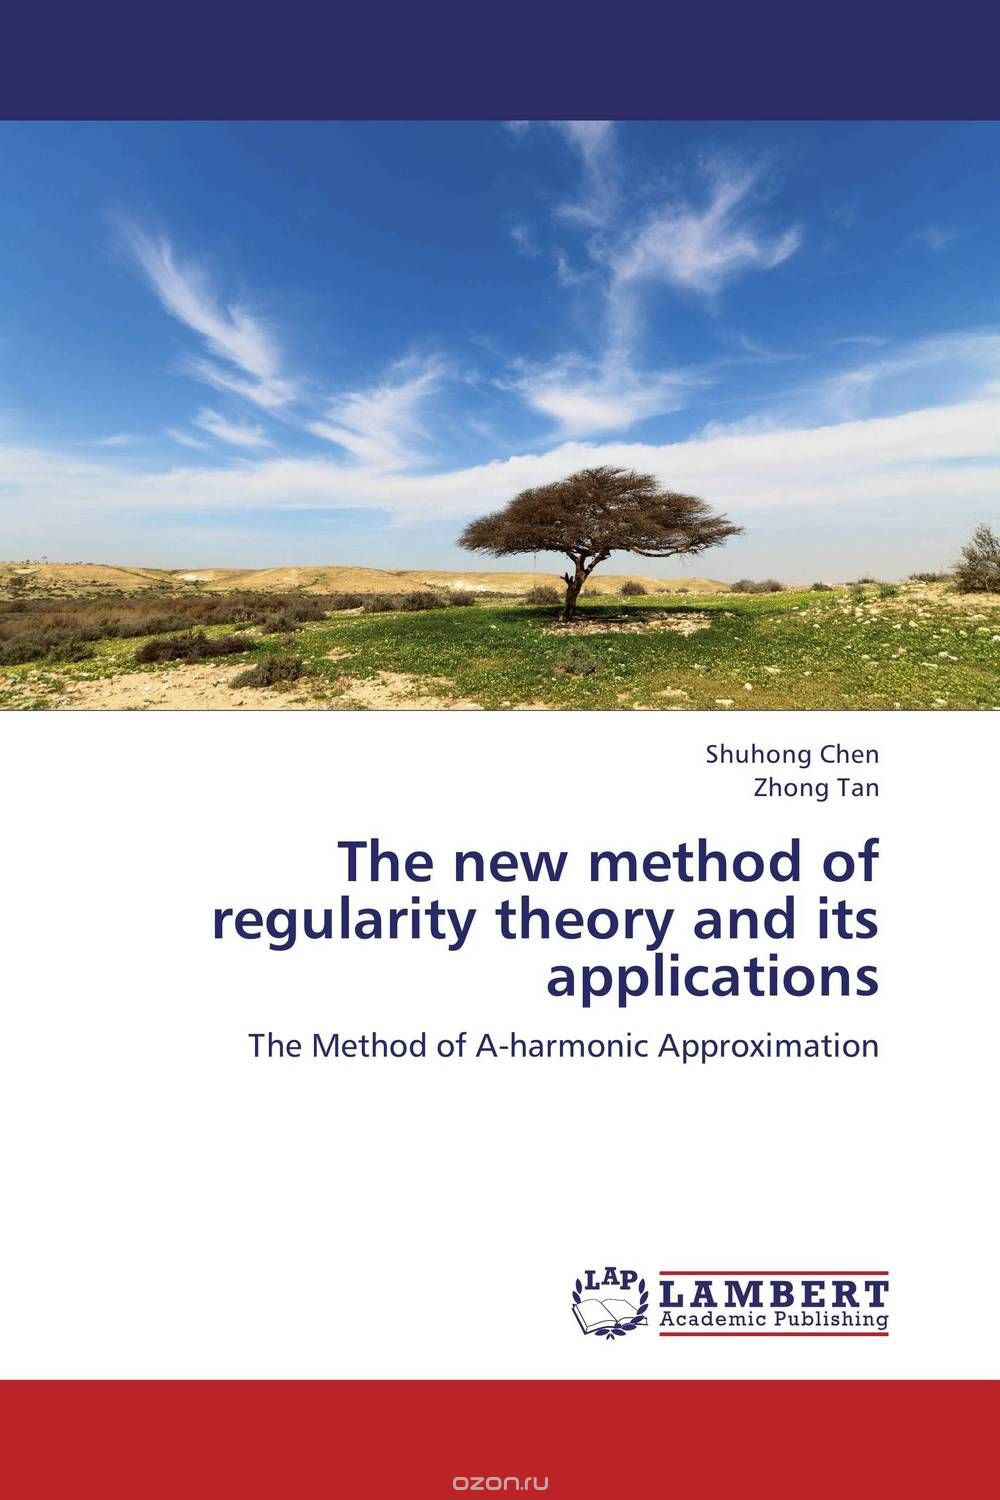 Скачать книгу "The new method of regularity theory and its applications"